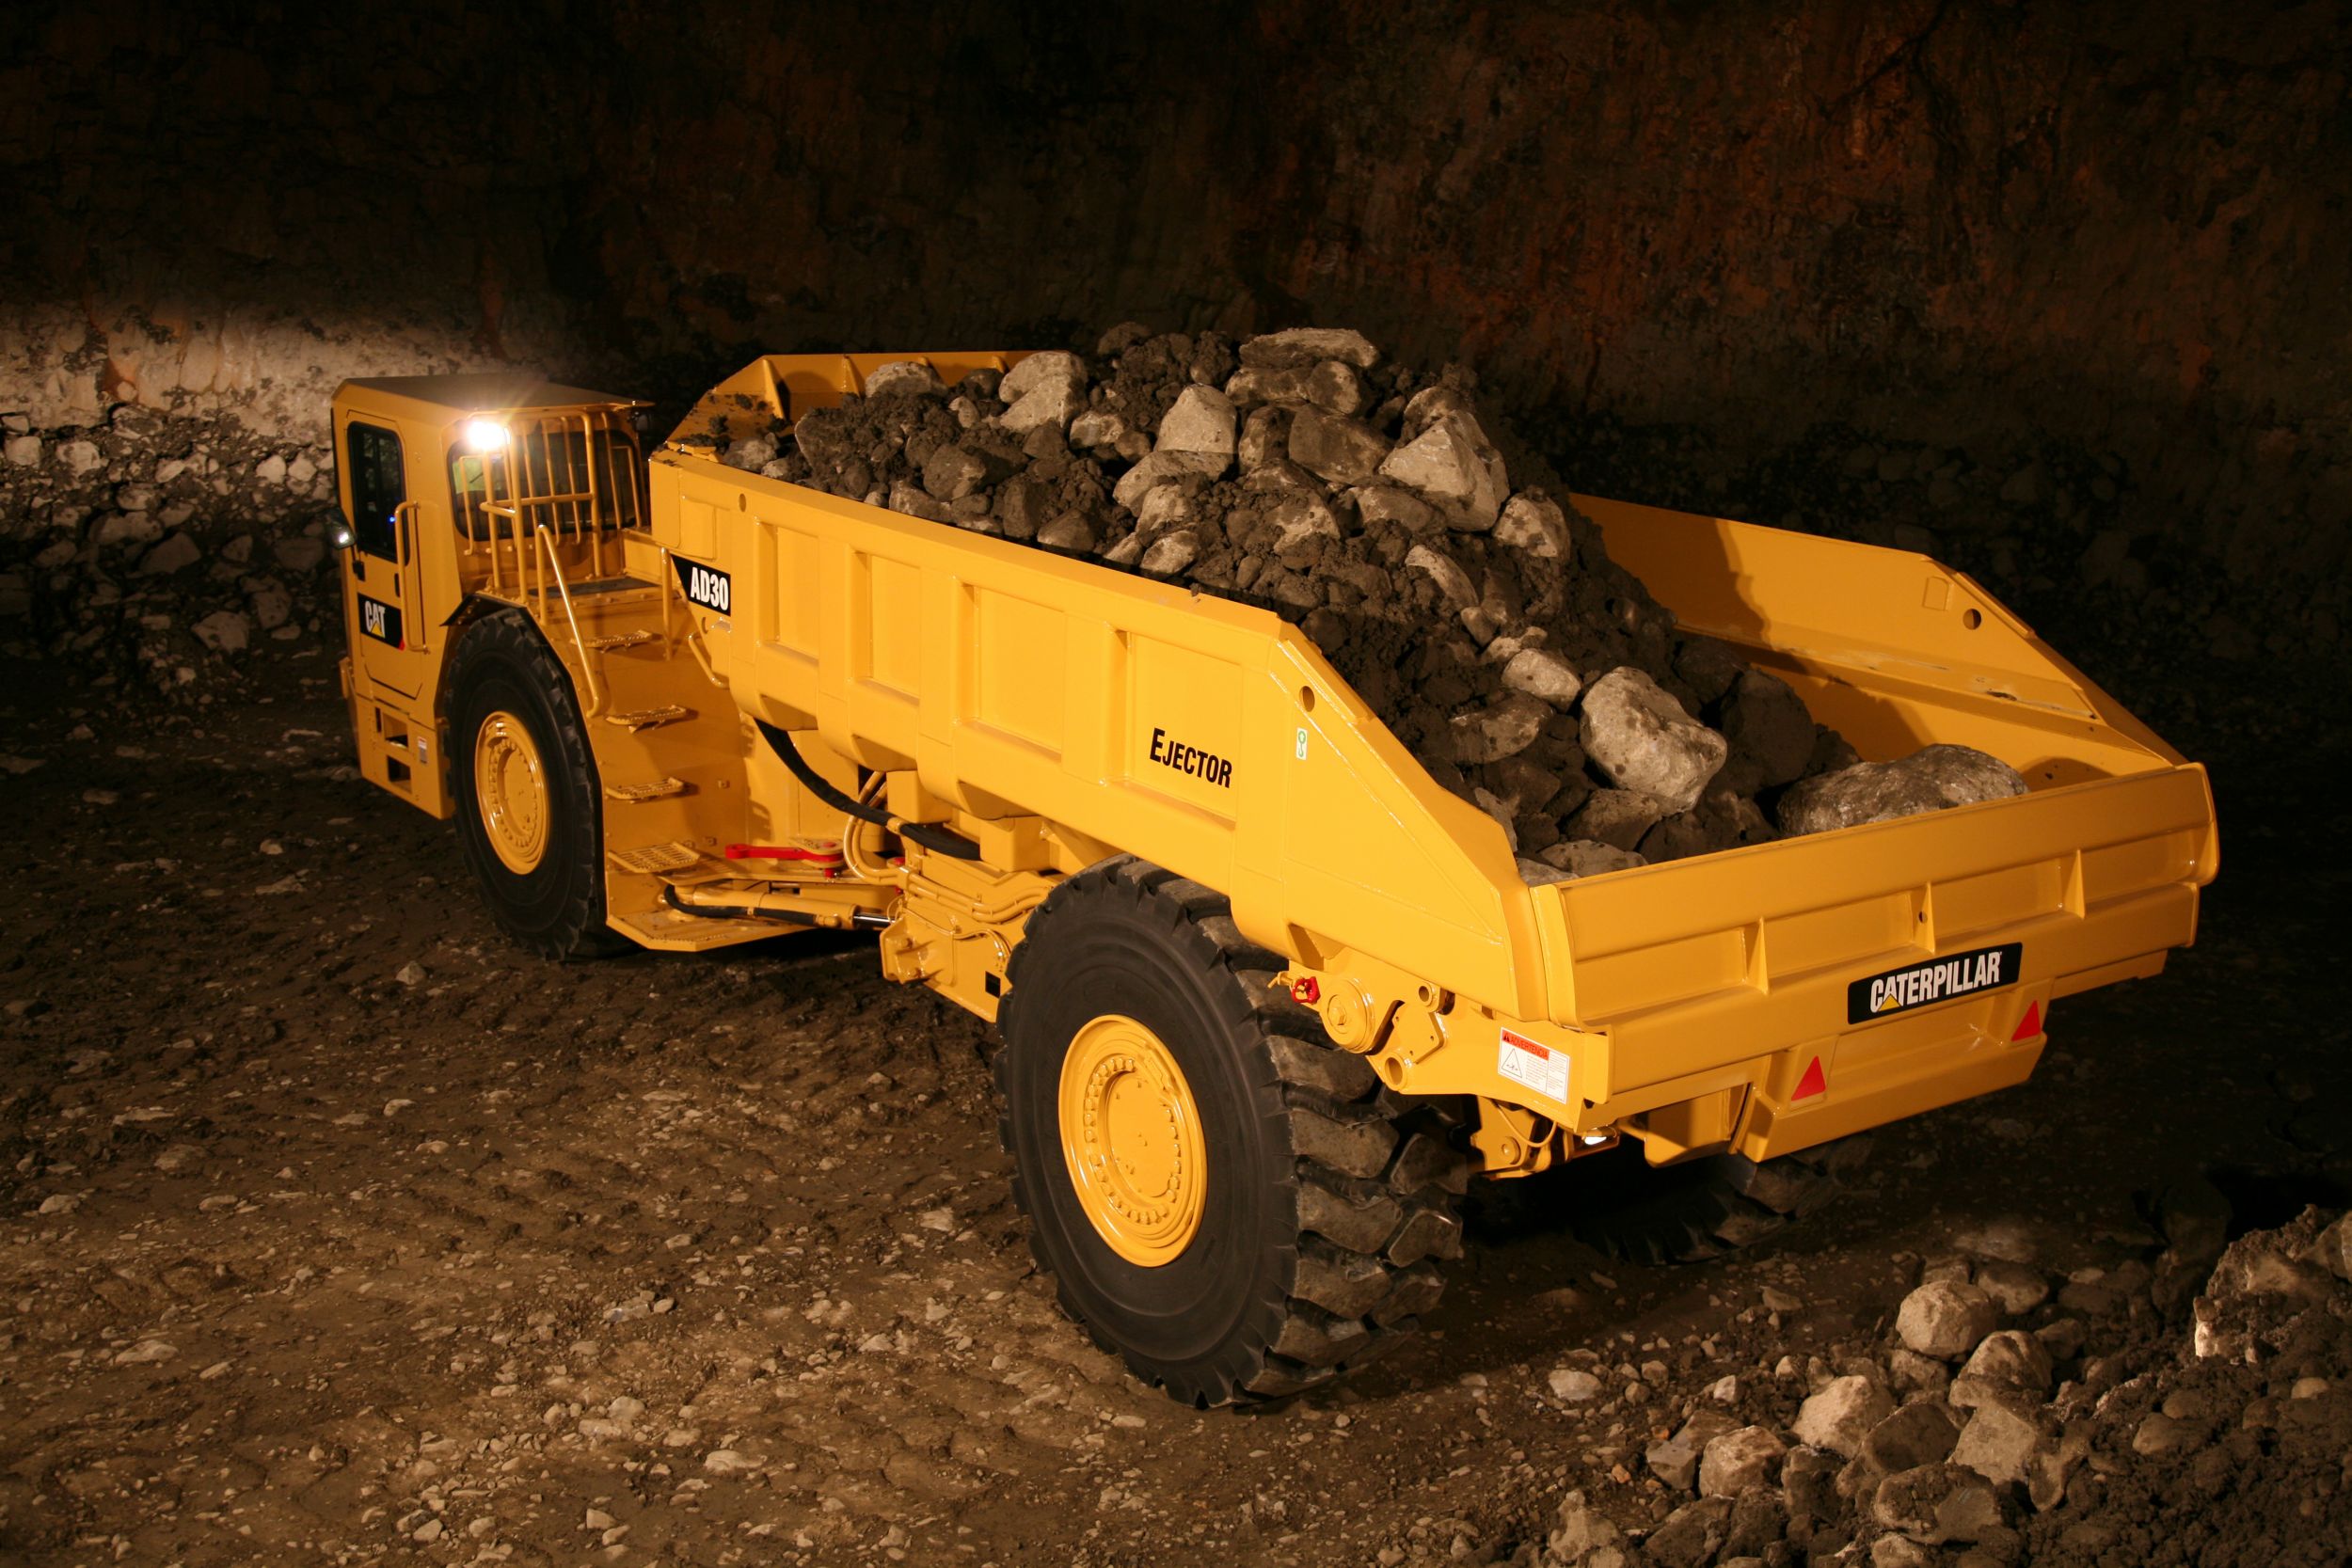 product-AD30 Underground Mining Truck